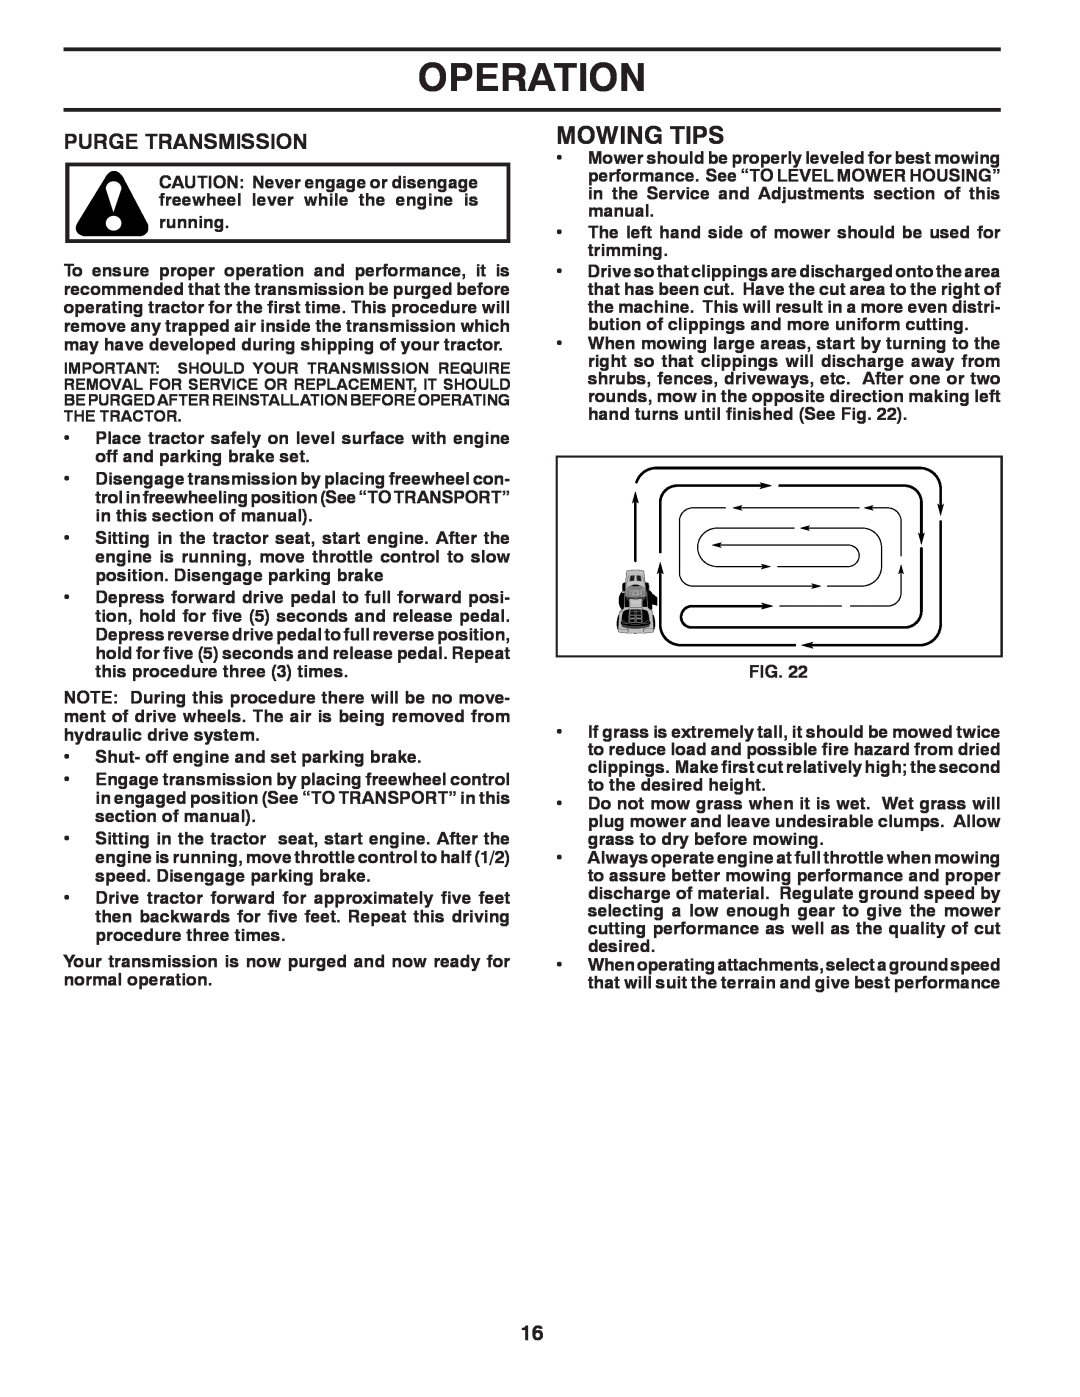 Poulan 96042006001 manual Mowing Tips, Purge Transmission, Operation 